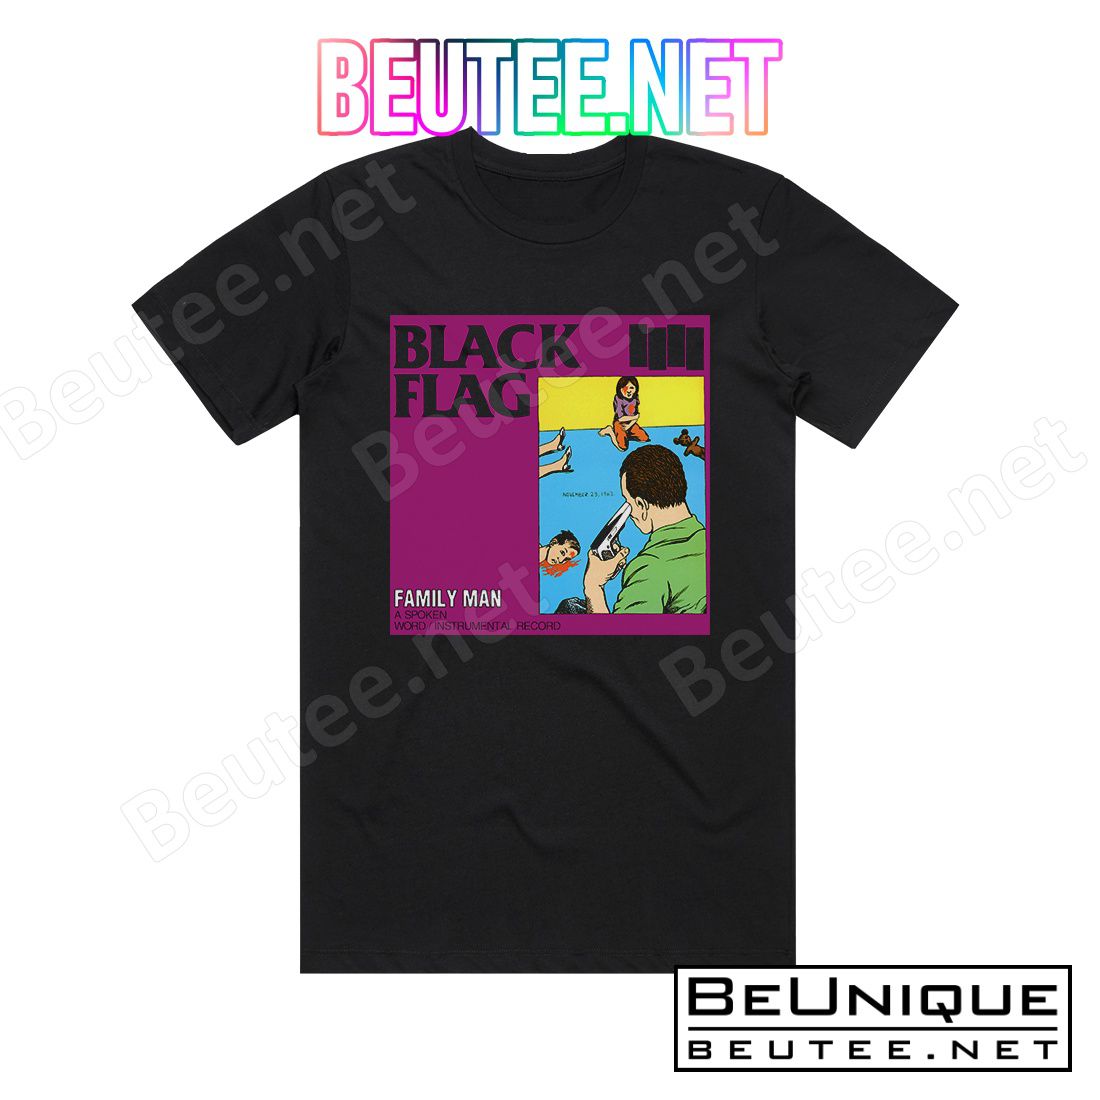 Black Flag Family Man Album Cover T-Shirt